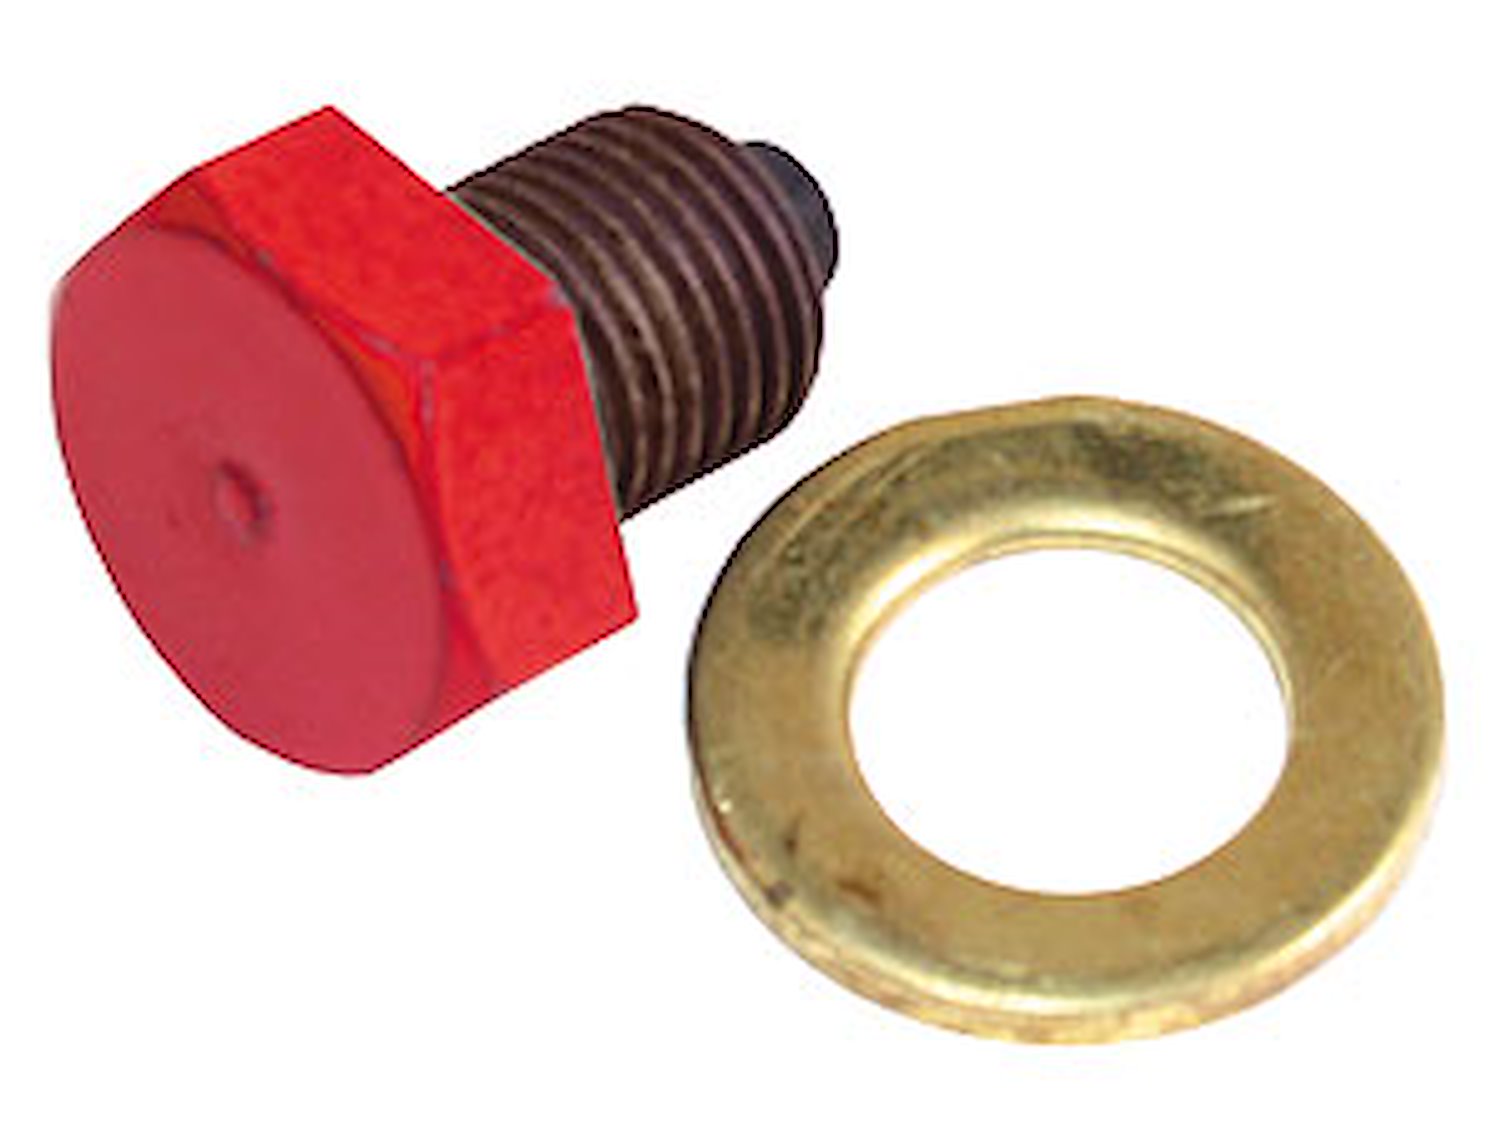 Magnetic Drain Plug and Seal 1/2" x 20 NPT